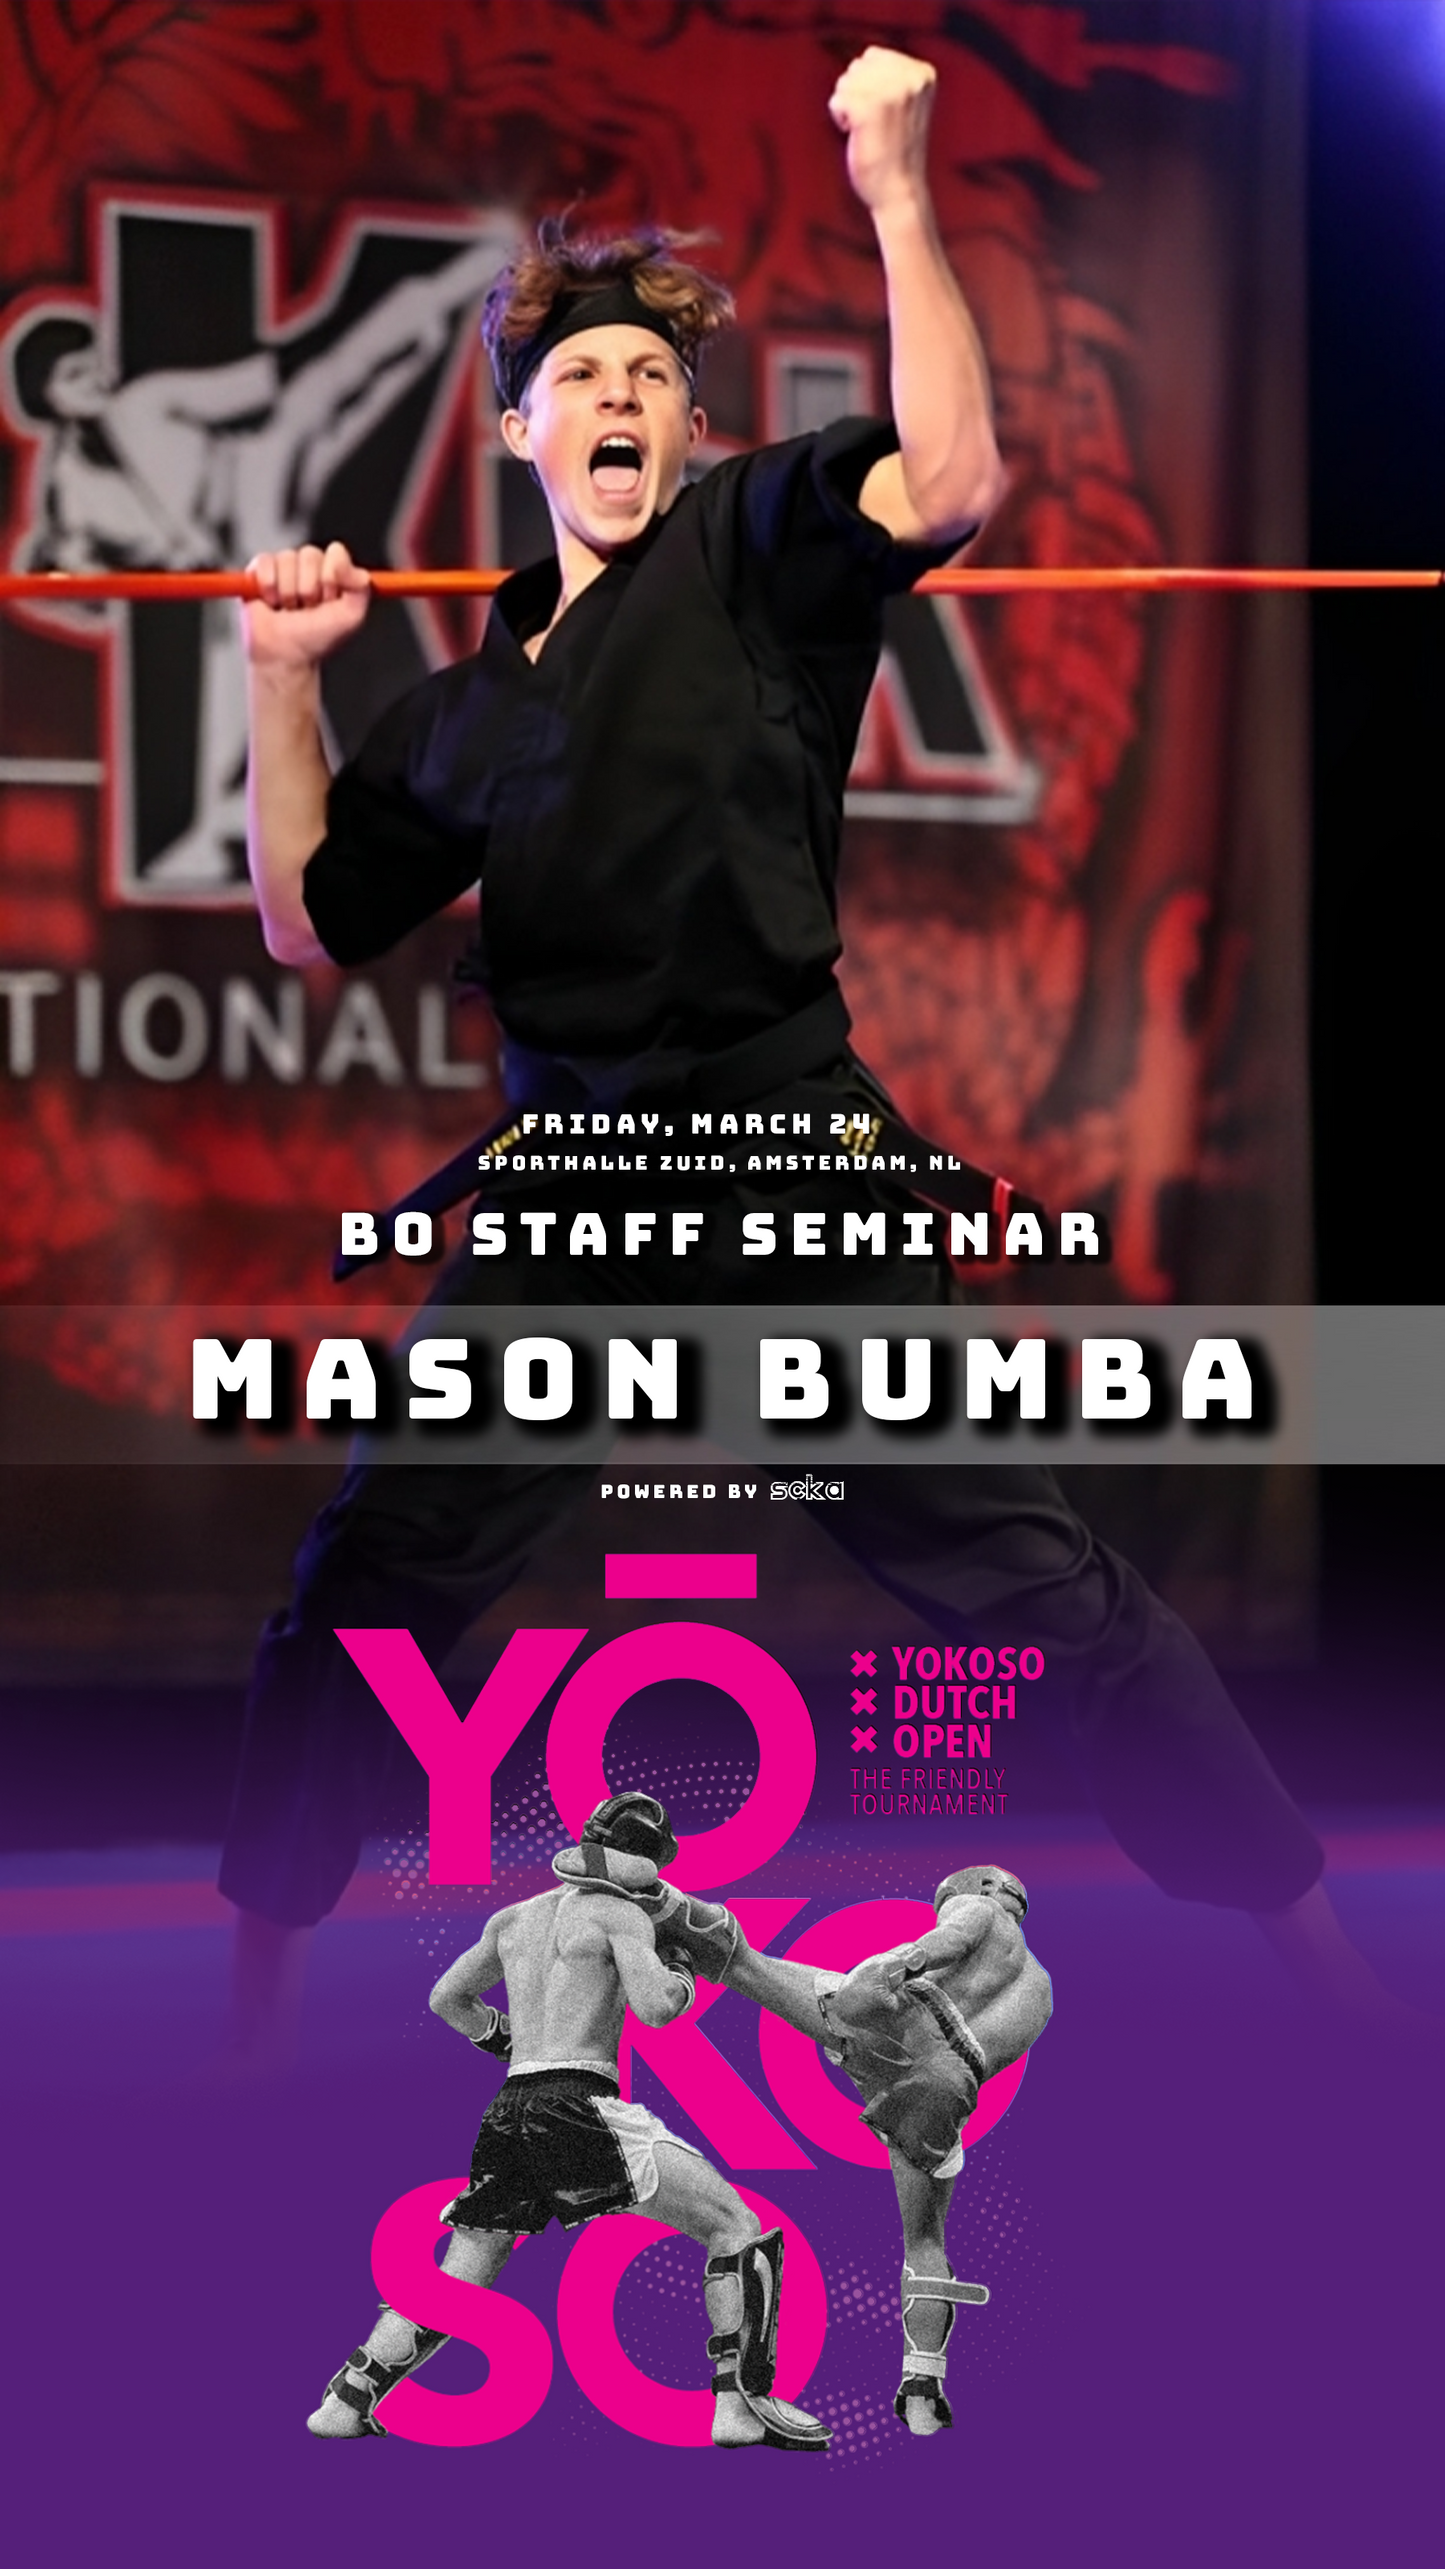 Mason Bumba Bo Staff Seminar @ YDO 2023 - Scka Weapons